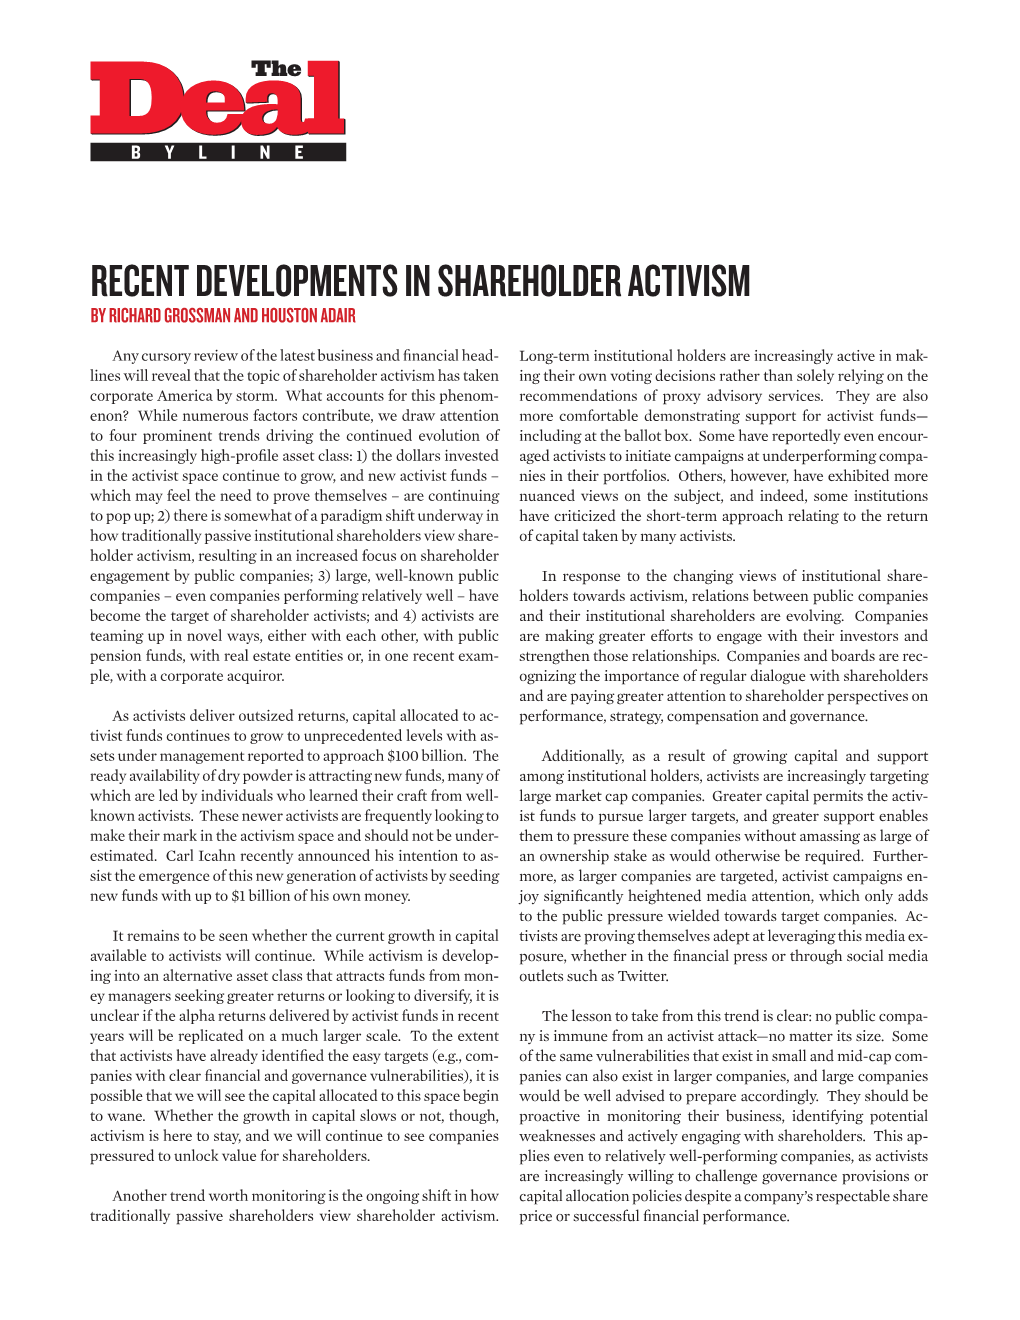 Recent Developments in Shareholder Activism by Richard Grossman and Houston Adair